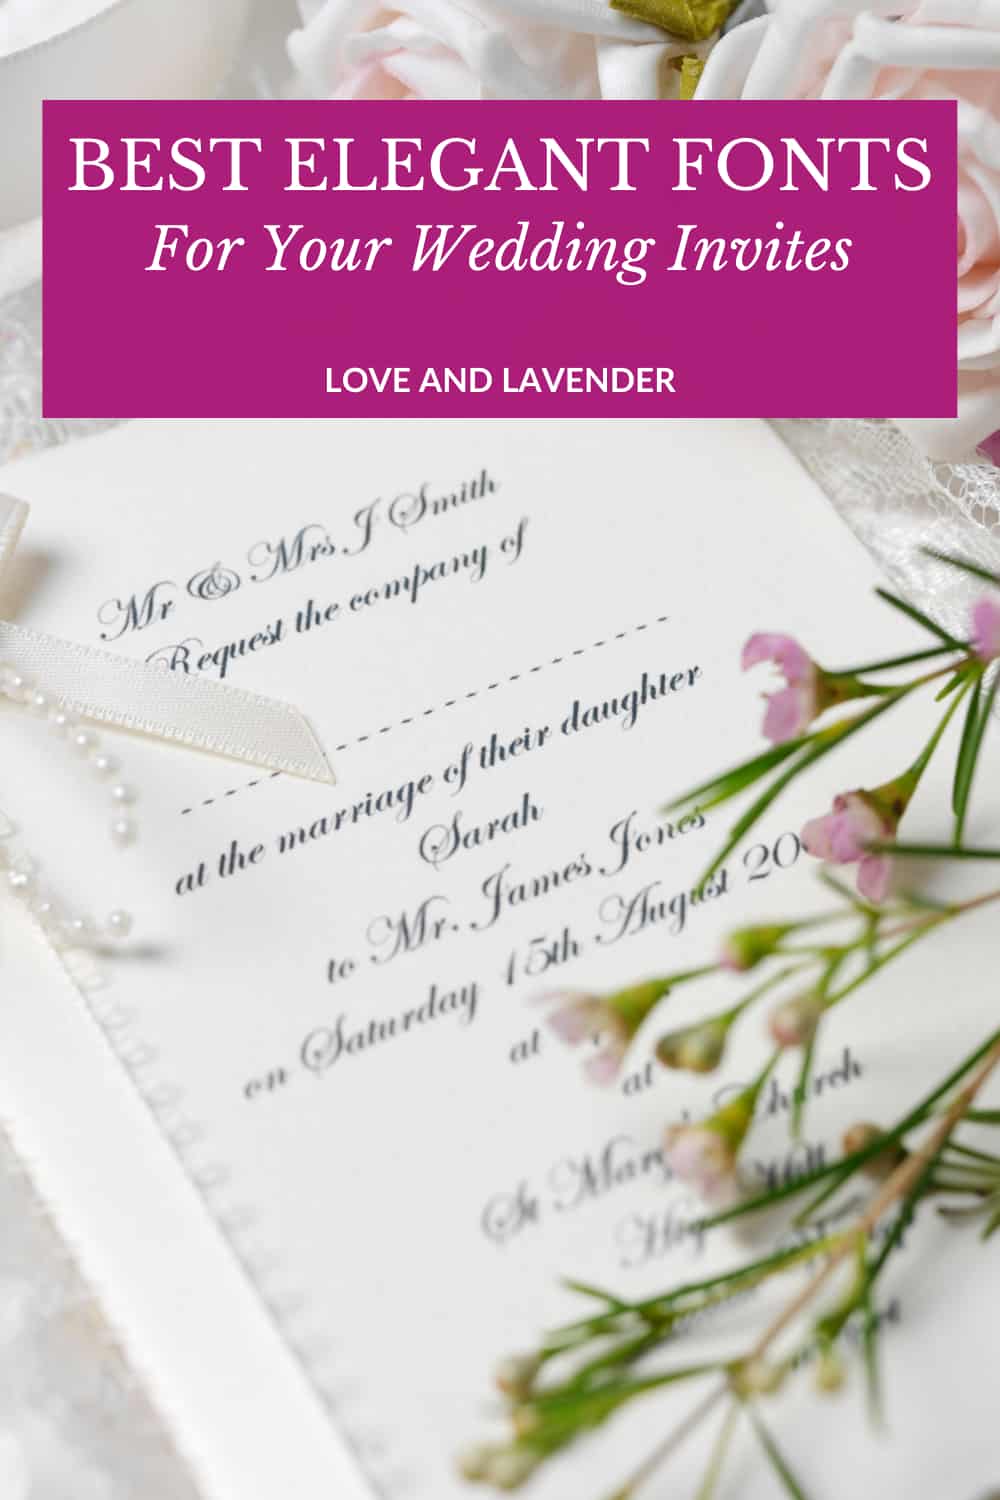 Pinterest pin - Best Elegant Fonts For Your Wedding Invites